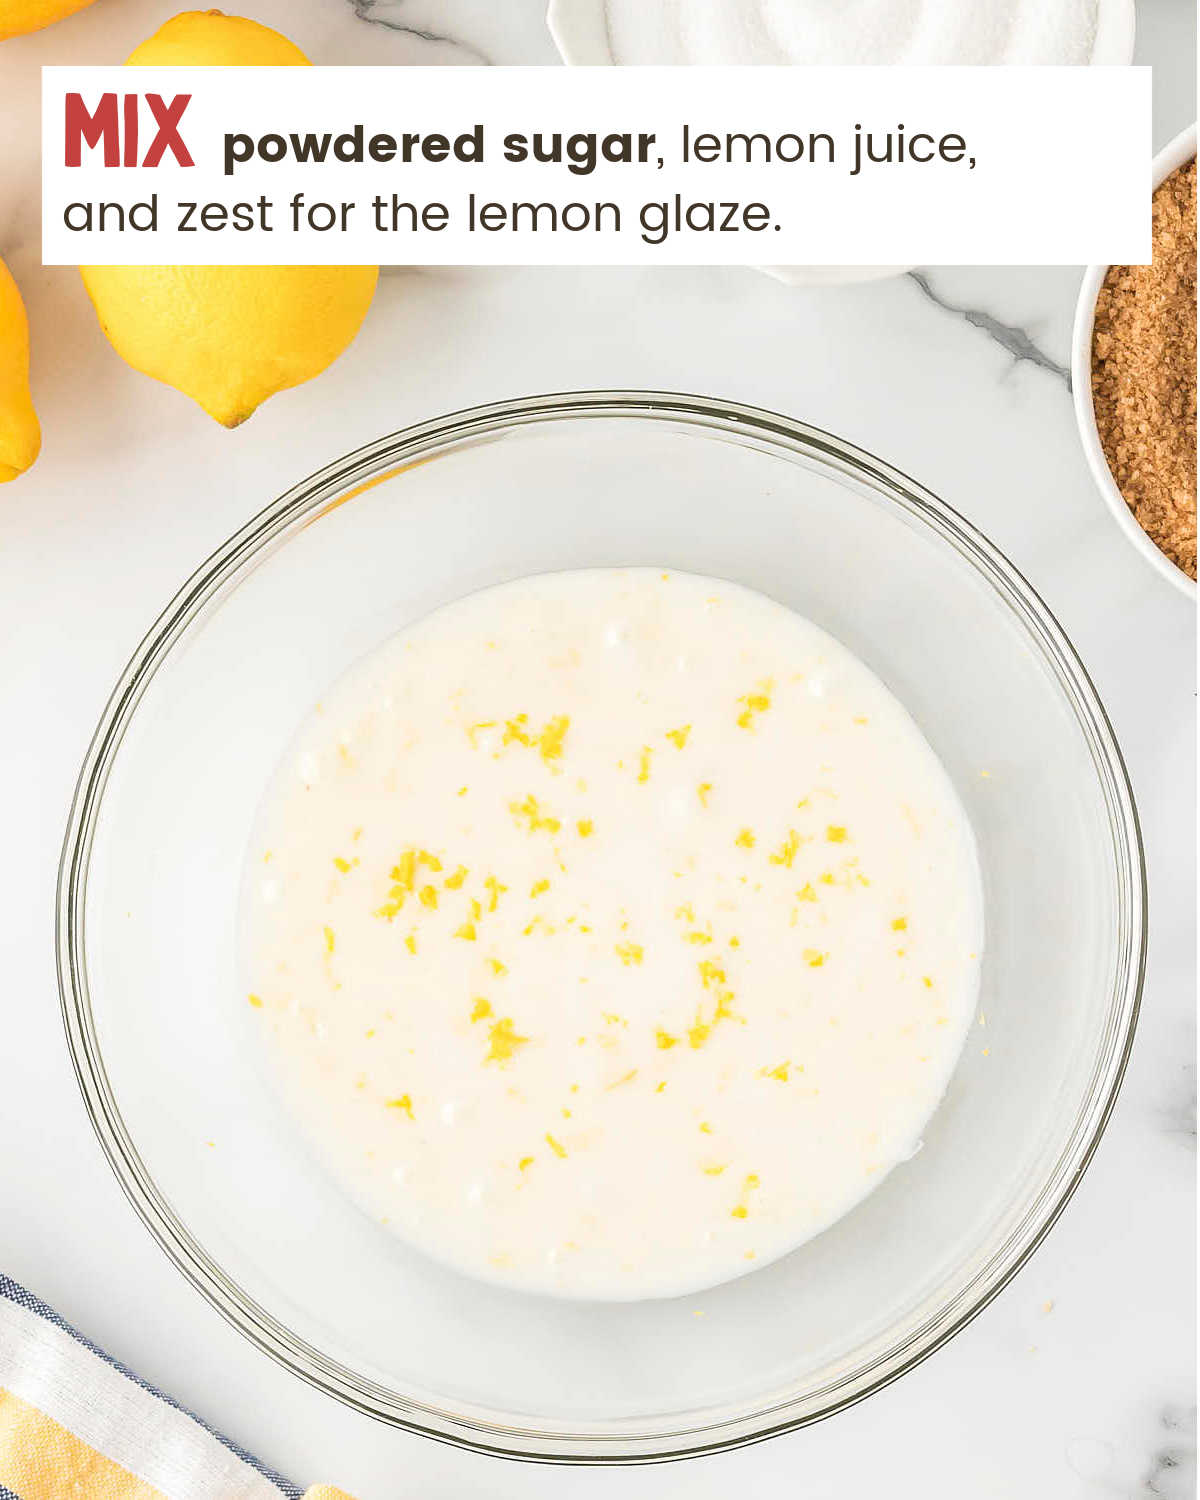 Lemon glaze in a clear glass bowl for Lemon Shortbread Cookies.